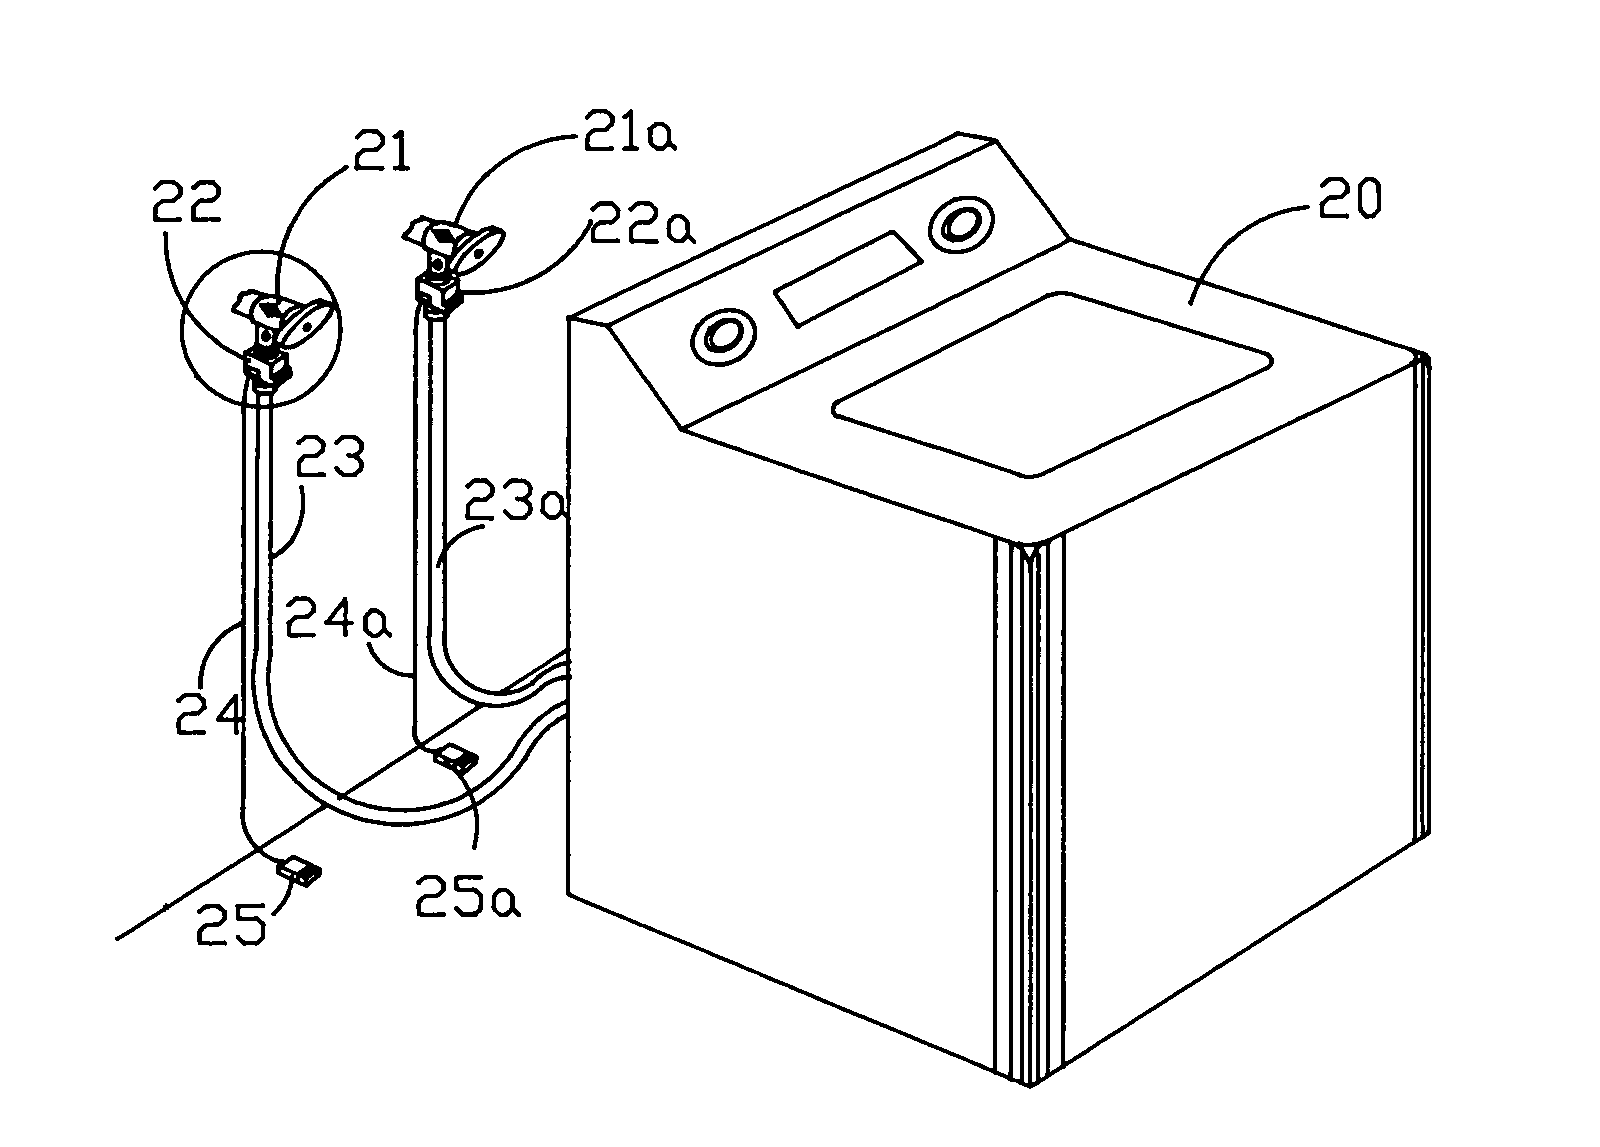 Shutoff valve system with leak detector